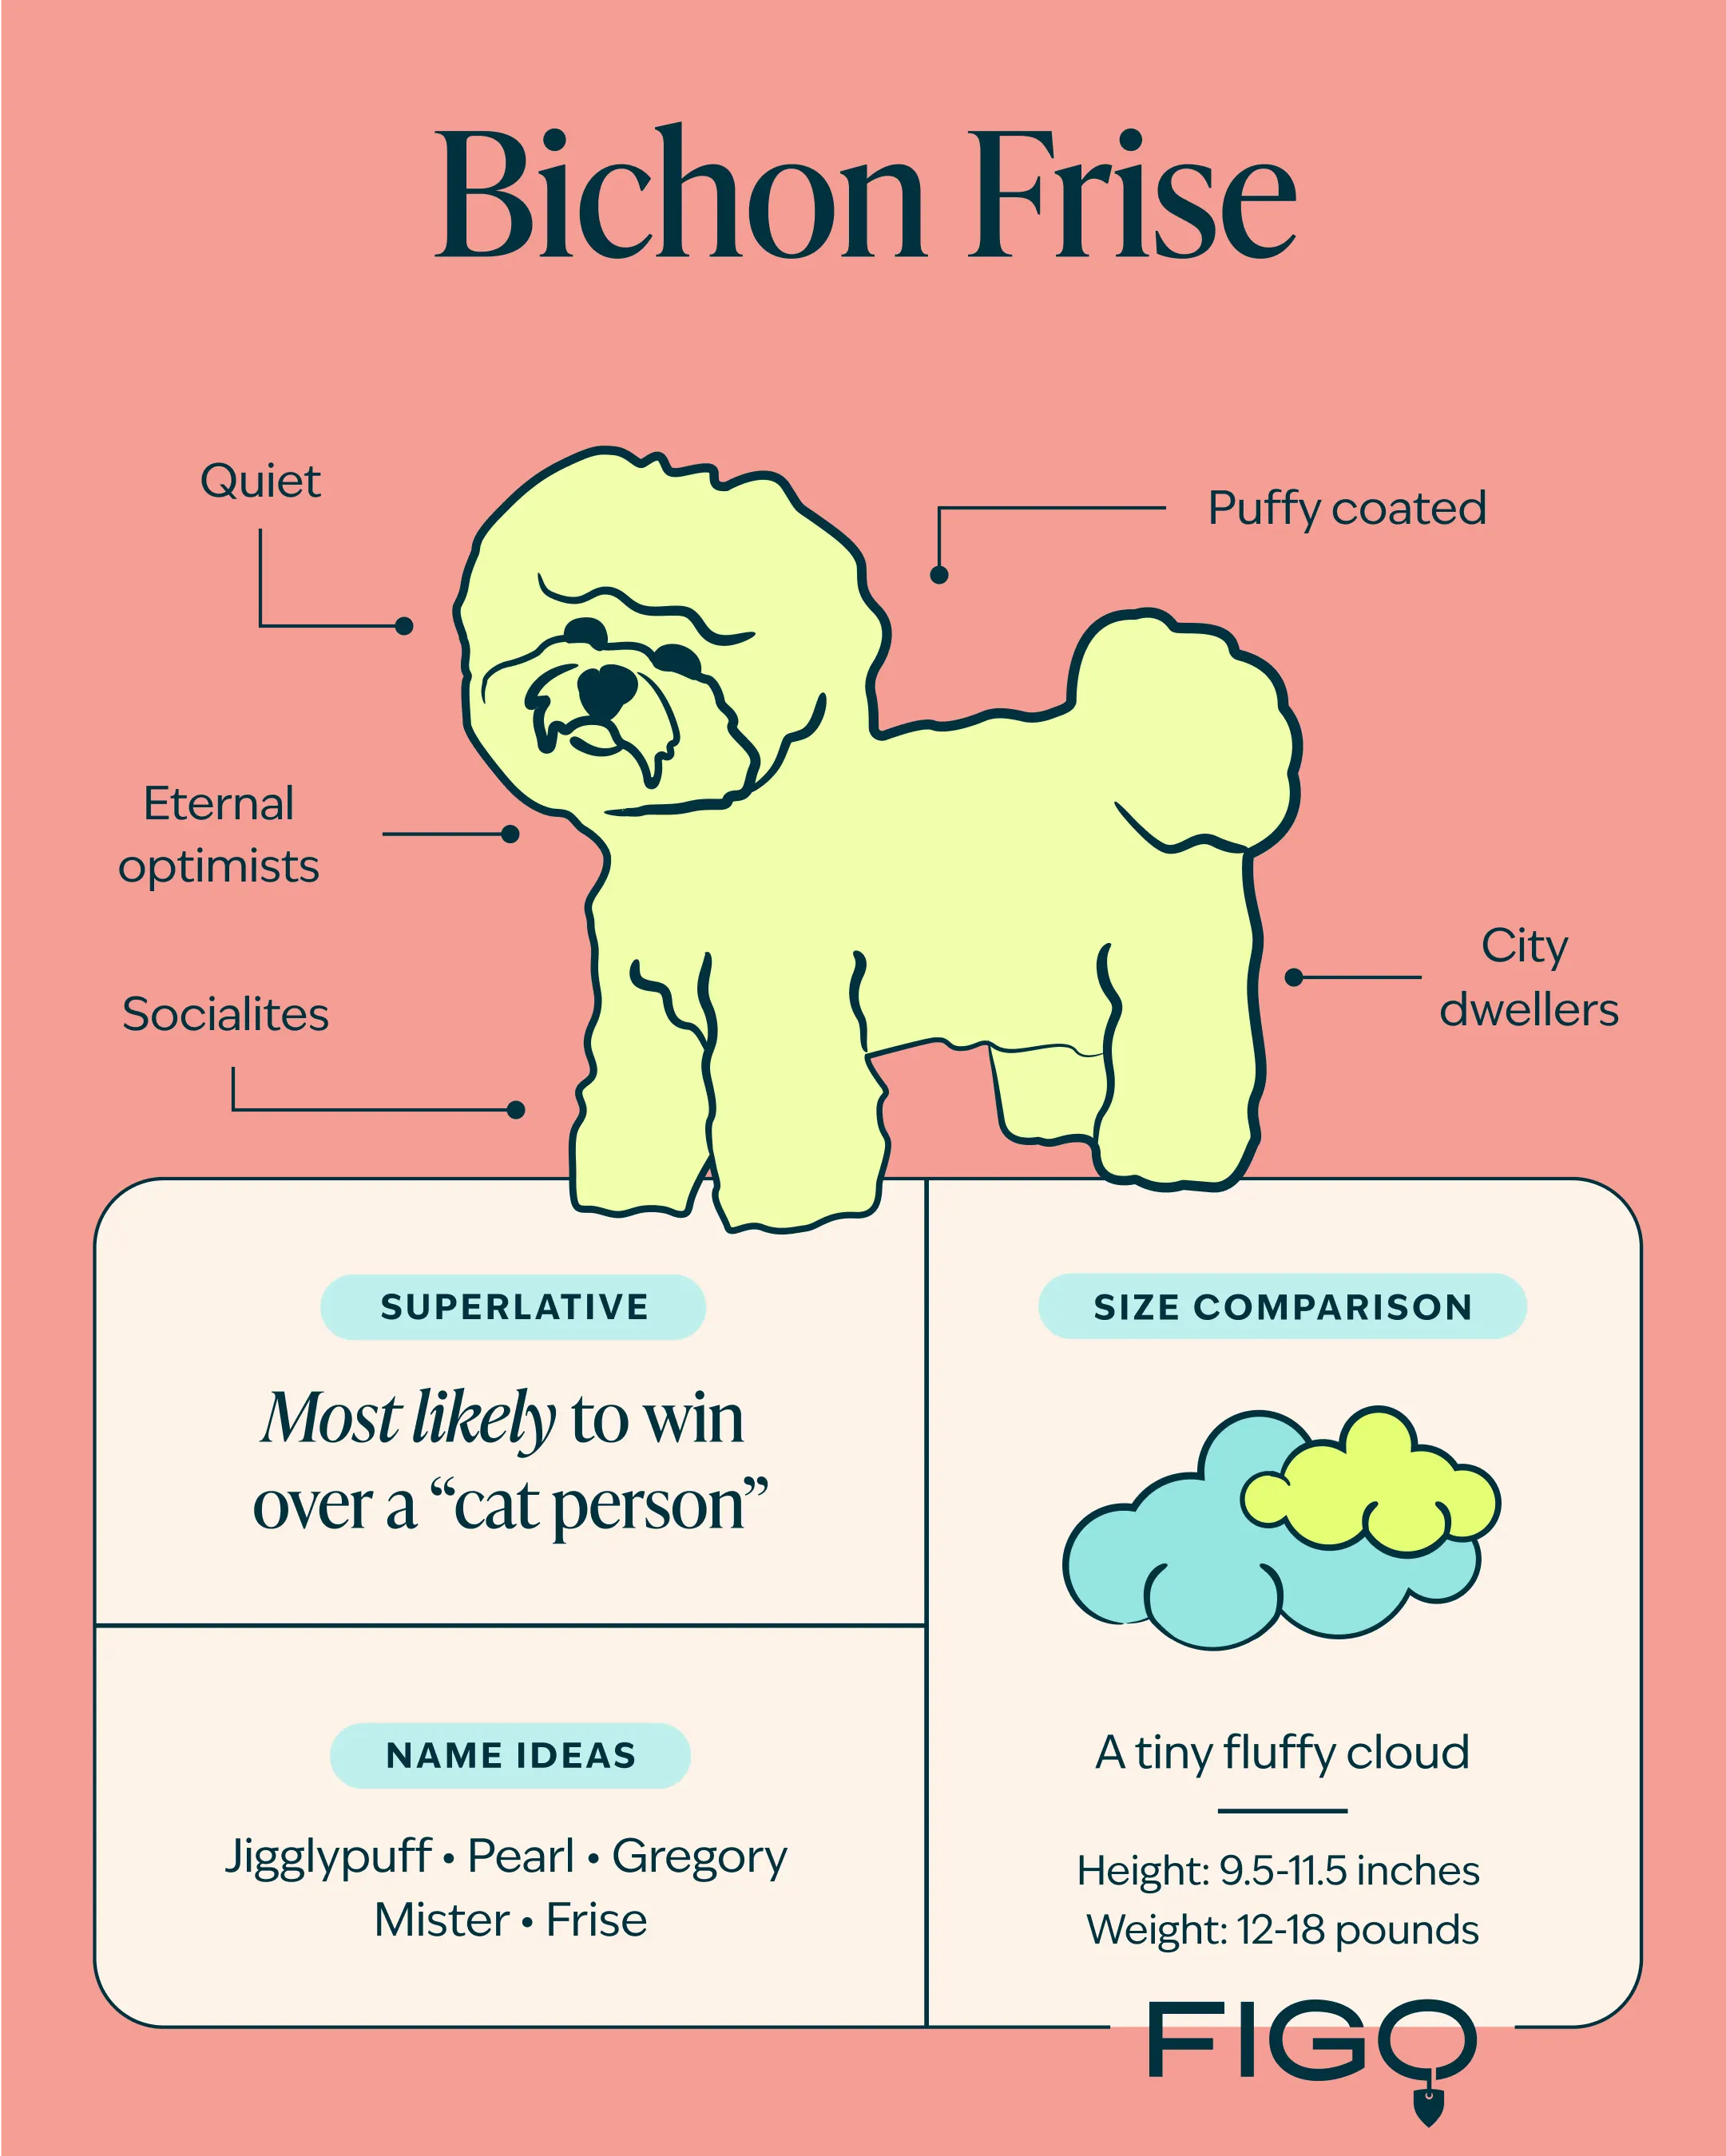 Bichon Frise Breed guide illustration